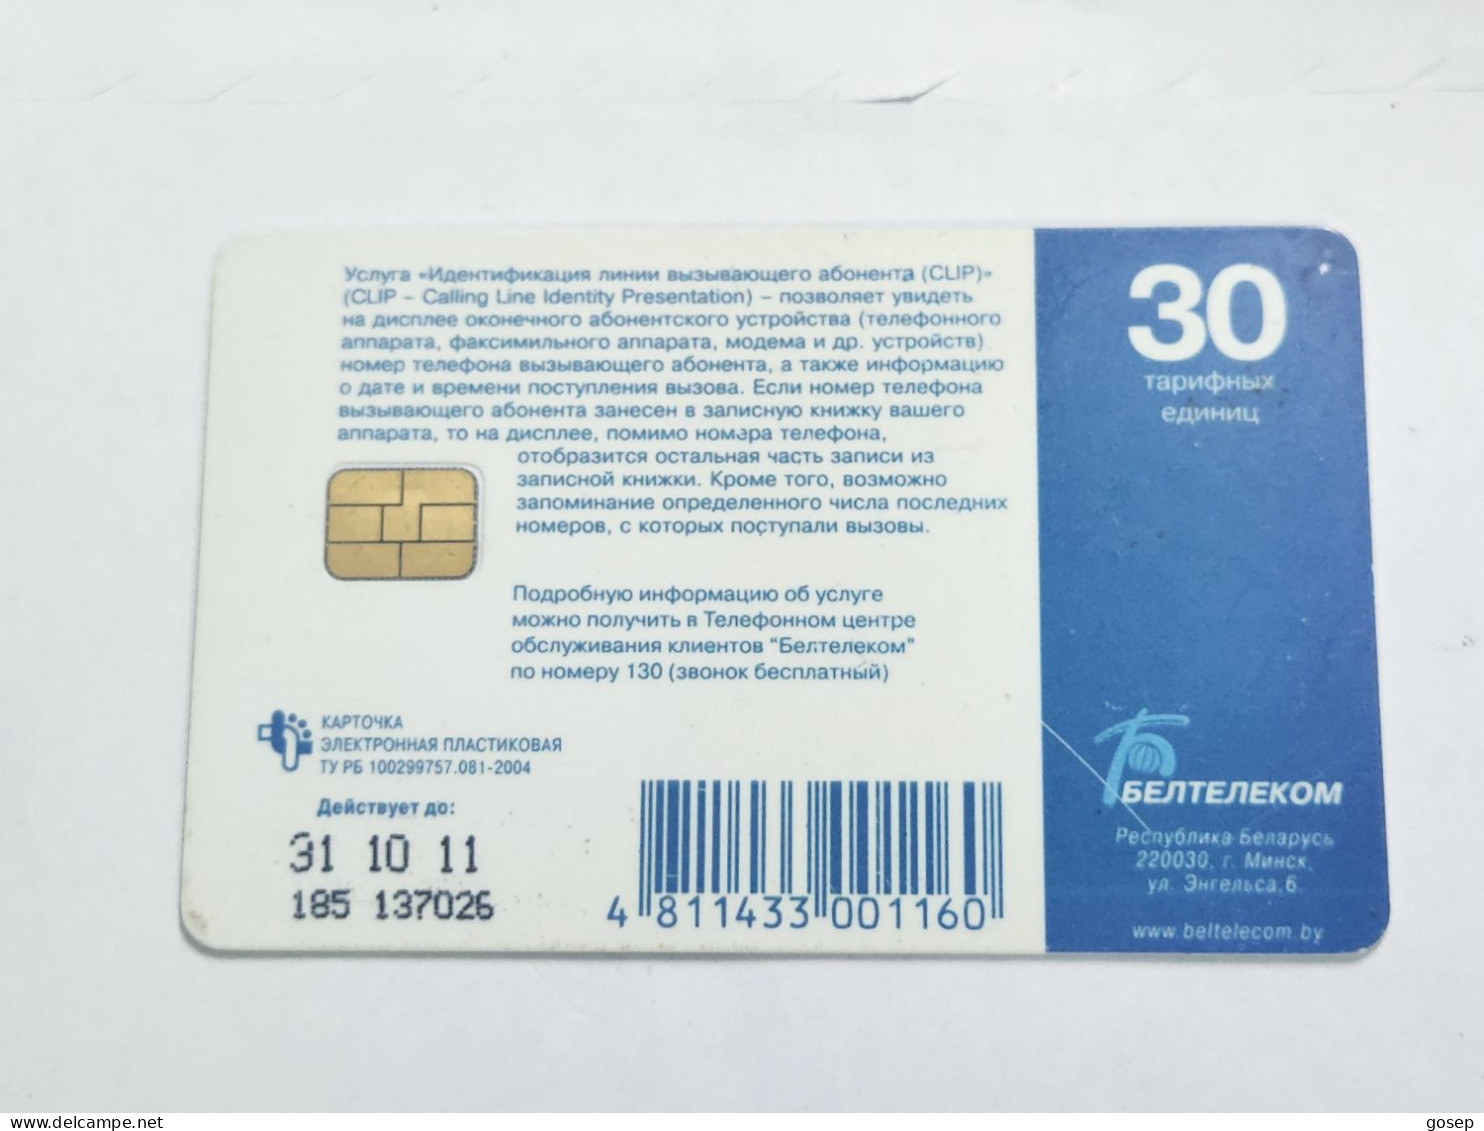 BELARUS-(BY-BLT-185a)-Green Leaf Among-(150)(GOLD CHIP)(137026)(tirage-?)-used Card+1card Prepiad Free - Belarus